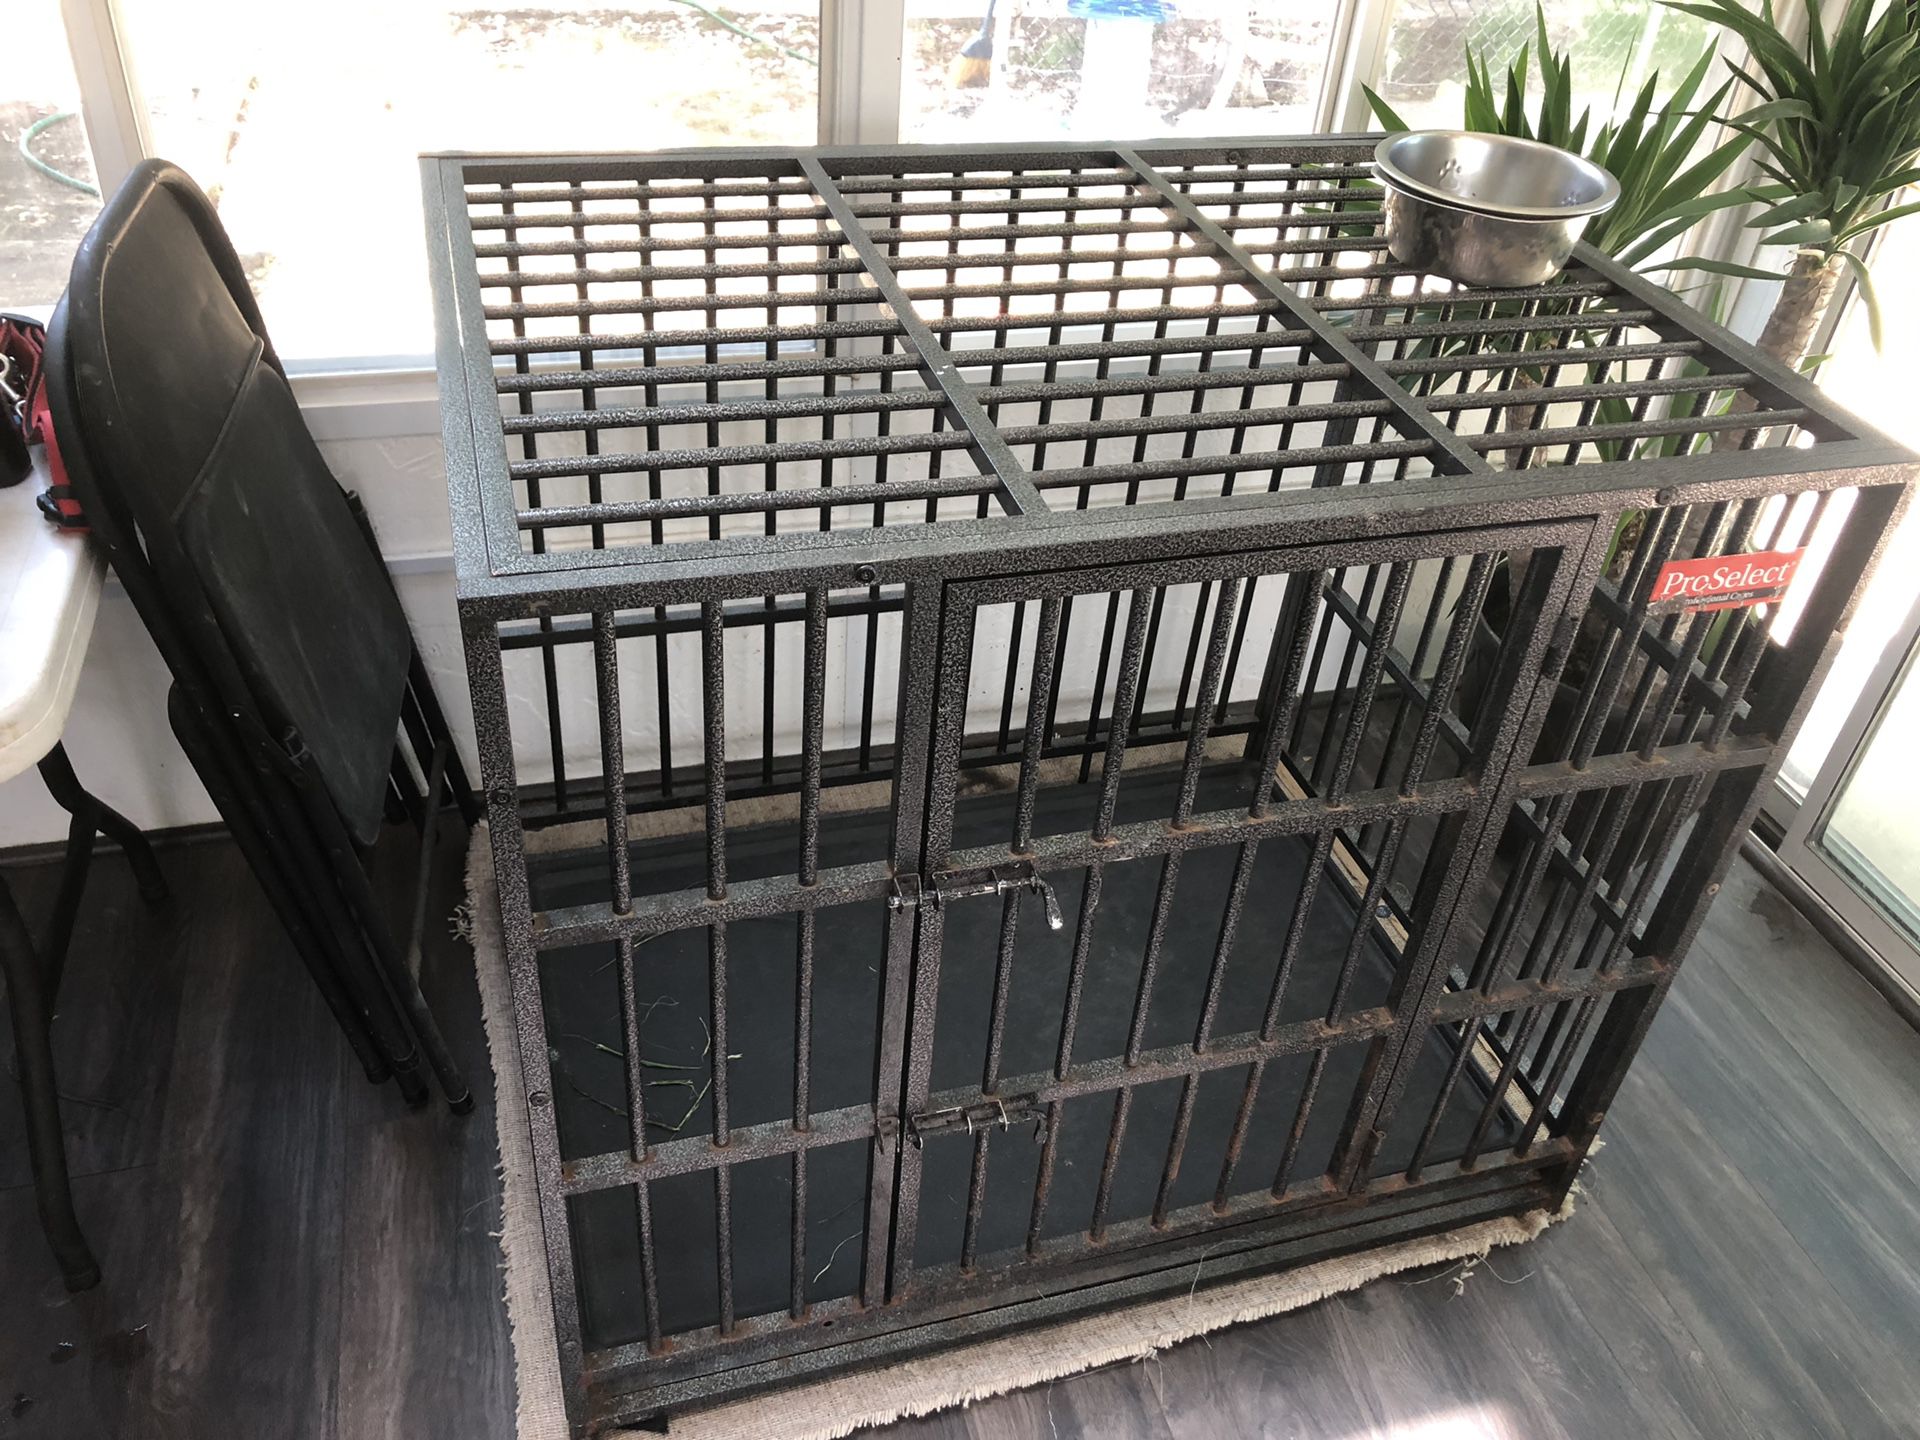 Dog cage